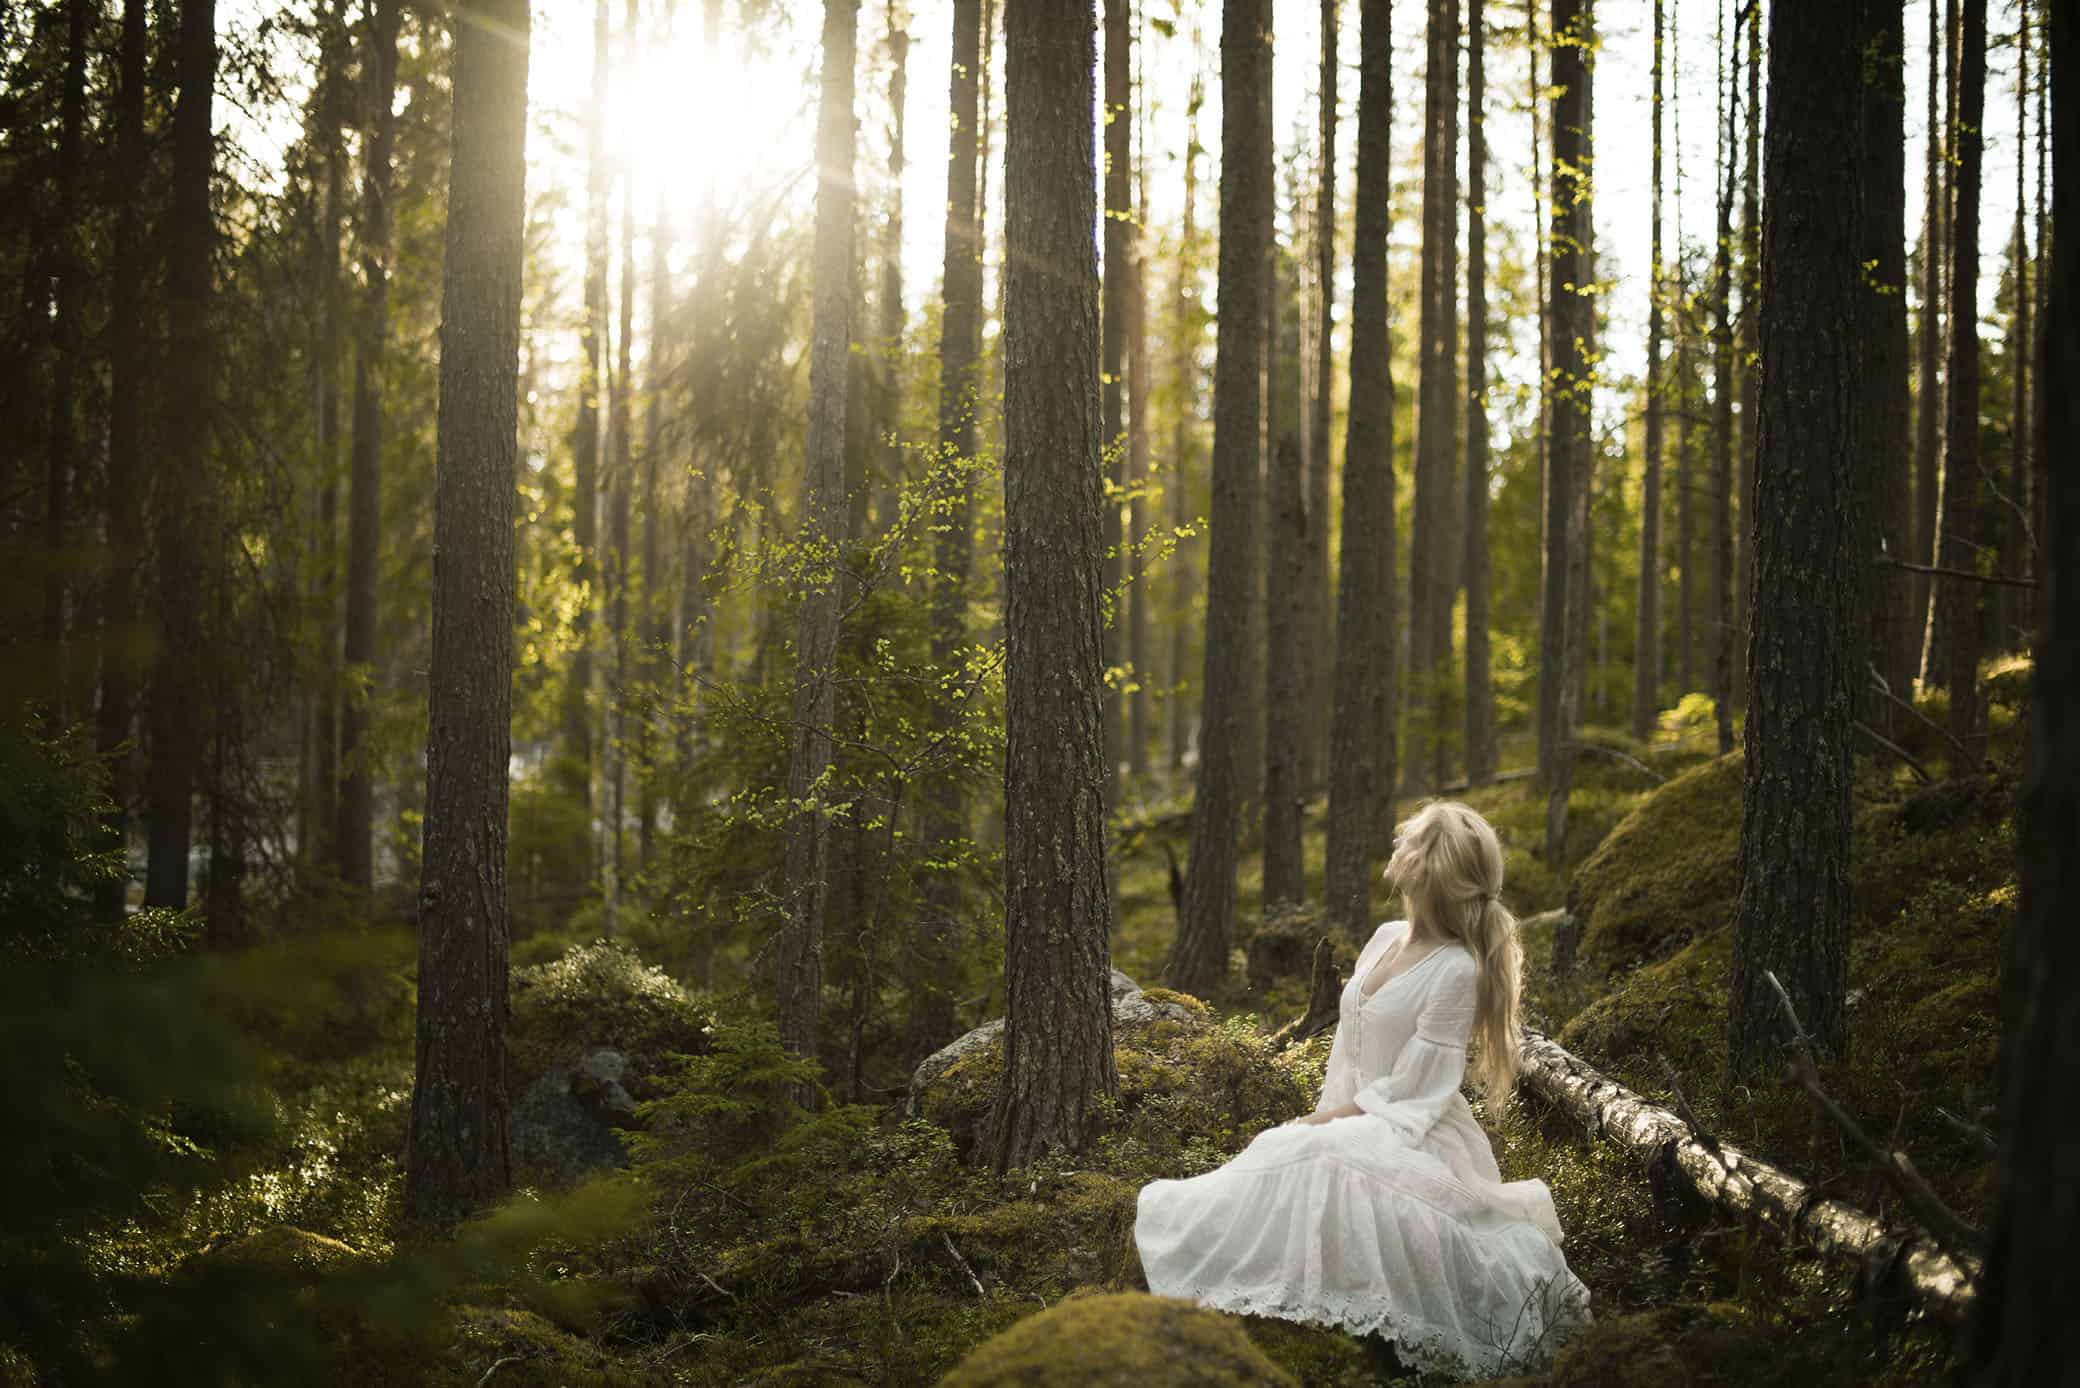 Fairy-Like Scandinavian Woman Sings In Her Hauntingly Beautiful Voice To Summon Gentle Beasts